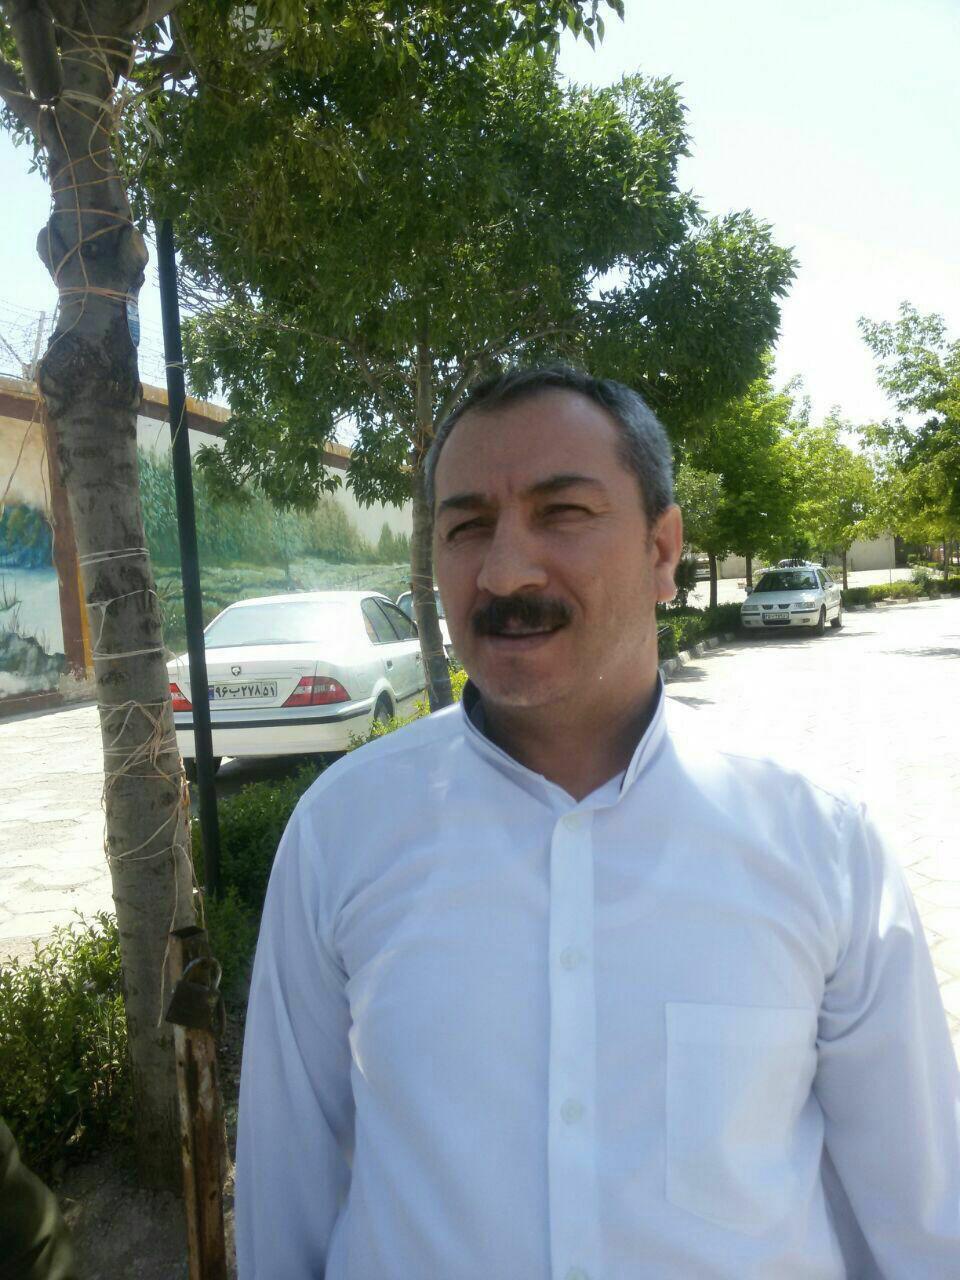 PUK deported escaped-Kurdish political prisoner to Iran